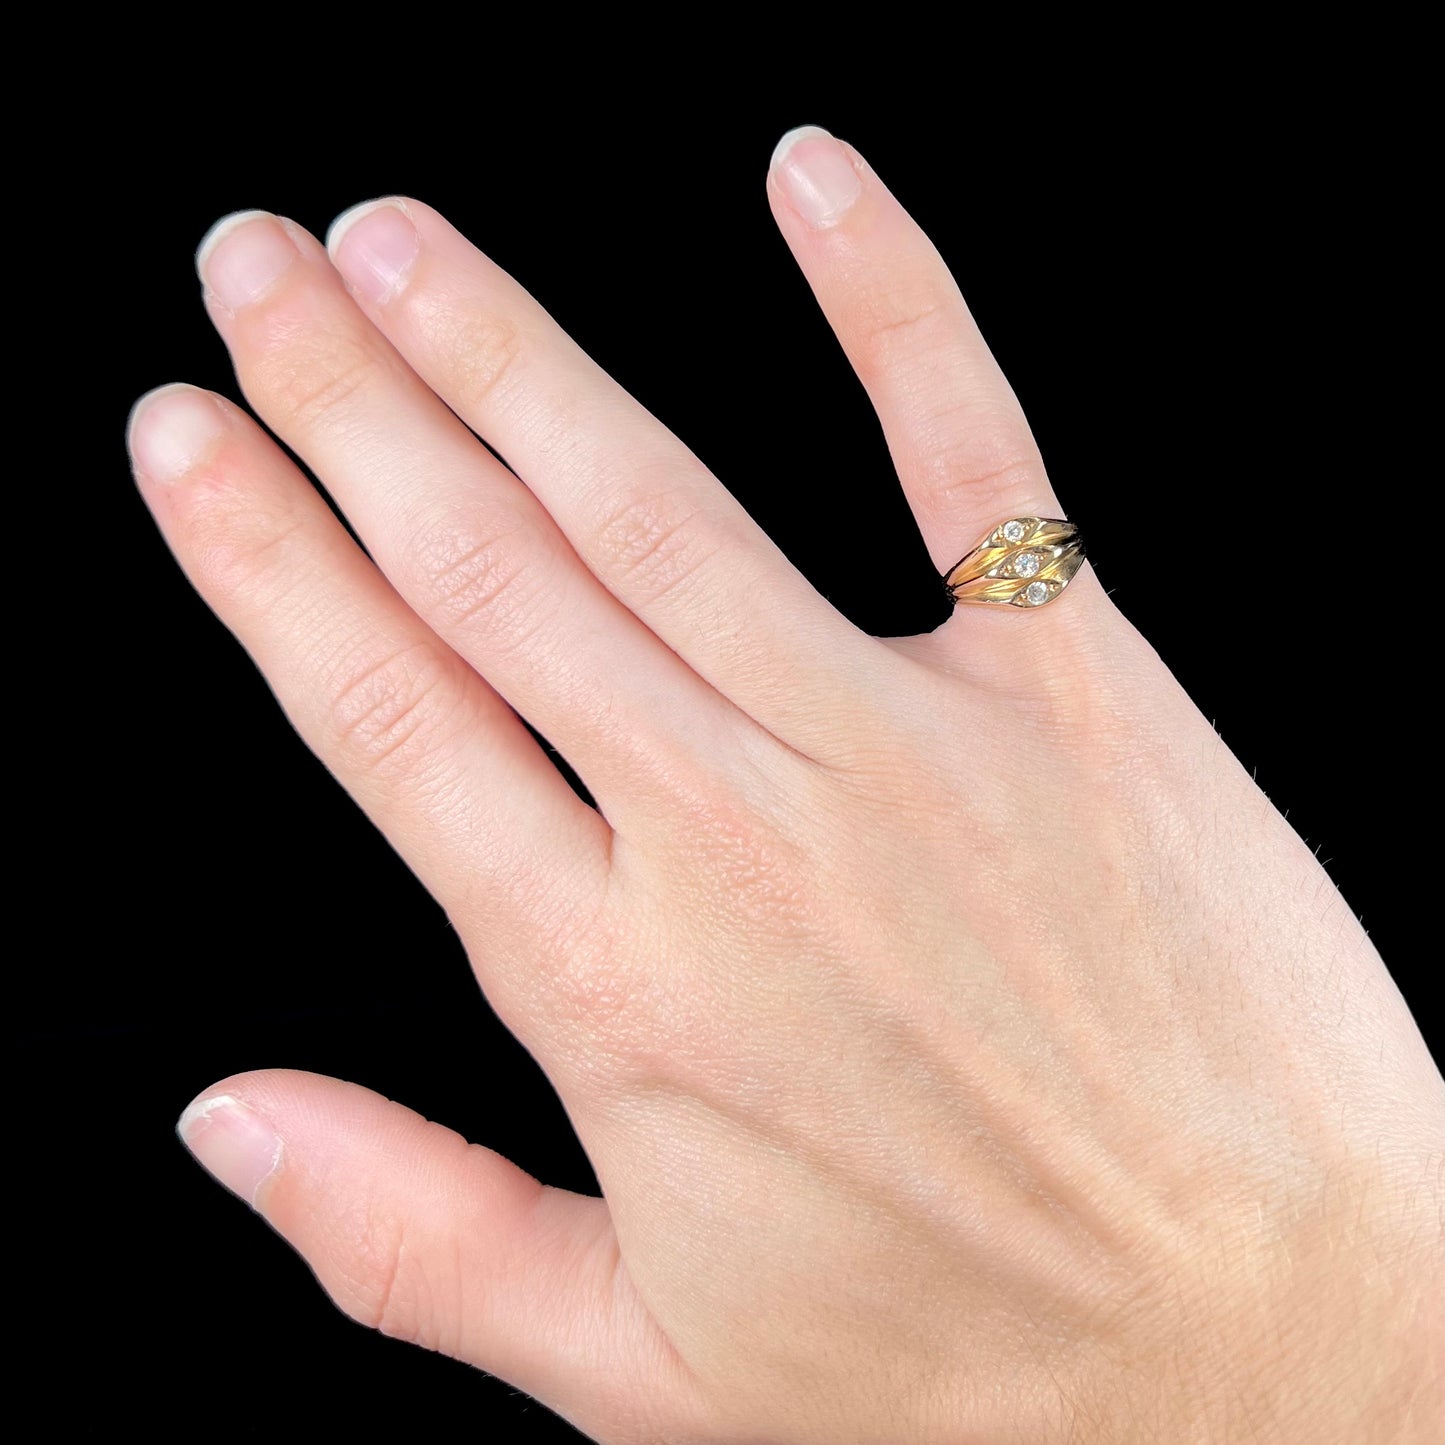 A vintage 1940's style ladies' yellow gold three stone diamond ring.